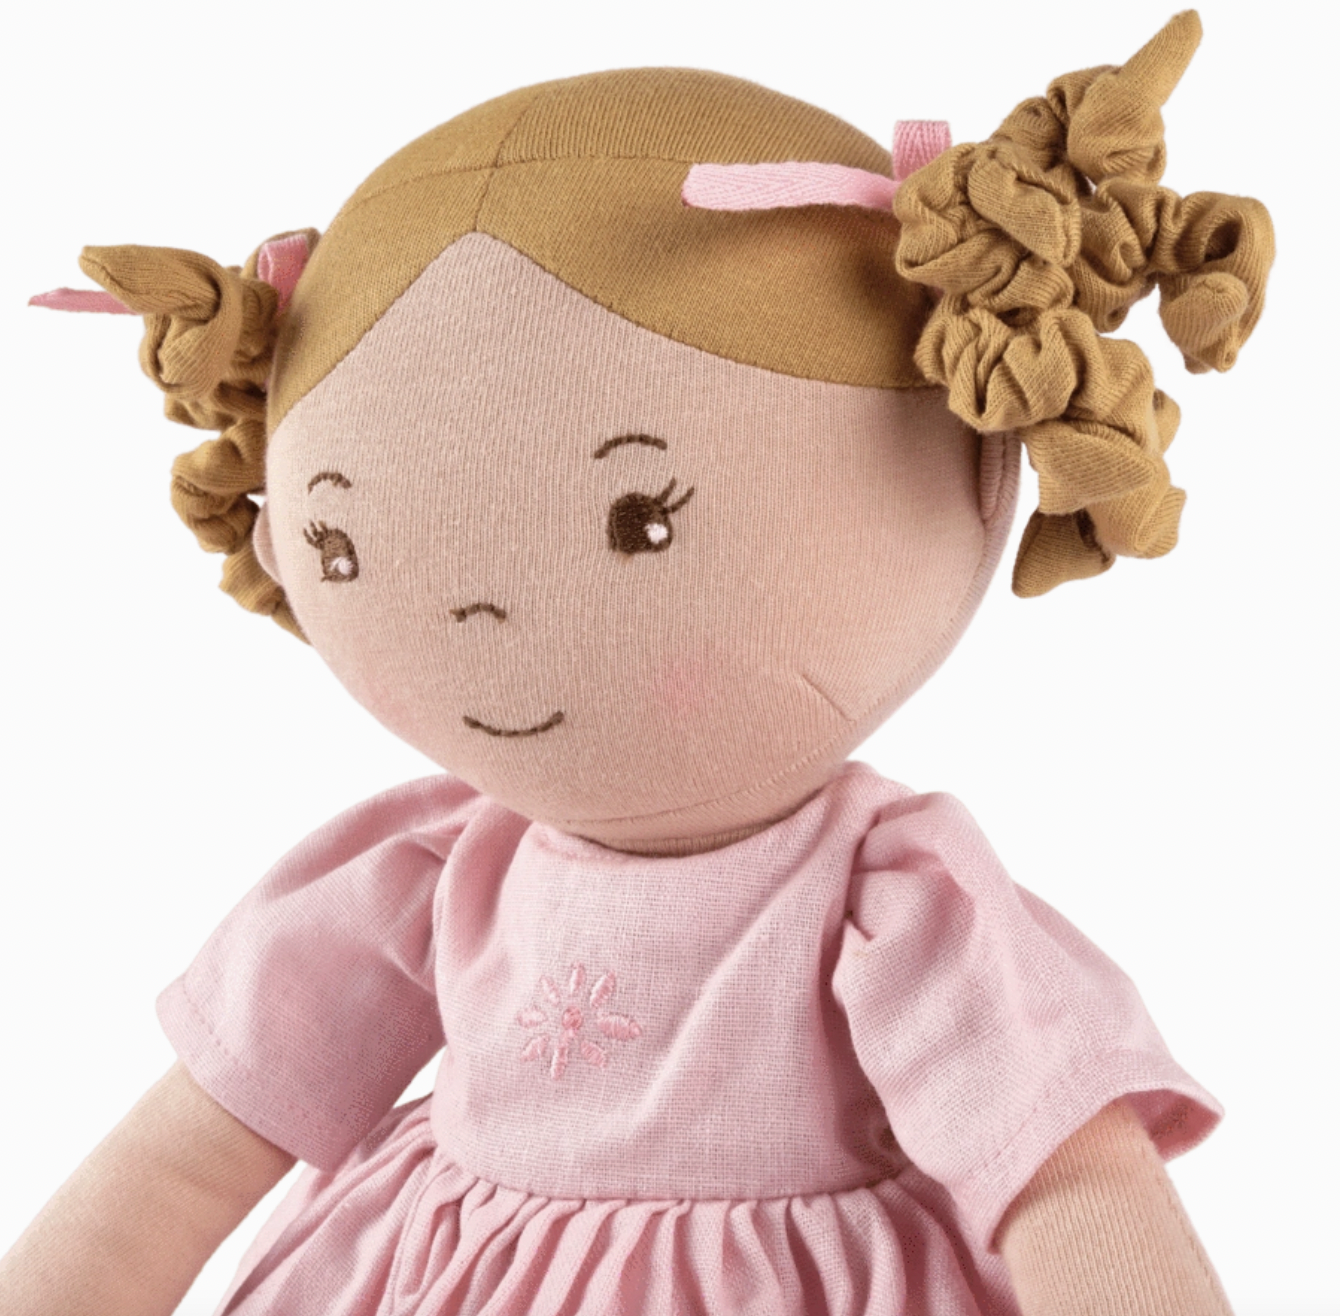 Amelia Lt. Brown Hair Doll in Pink Linen Dress W/Display Box